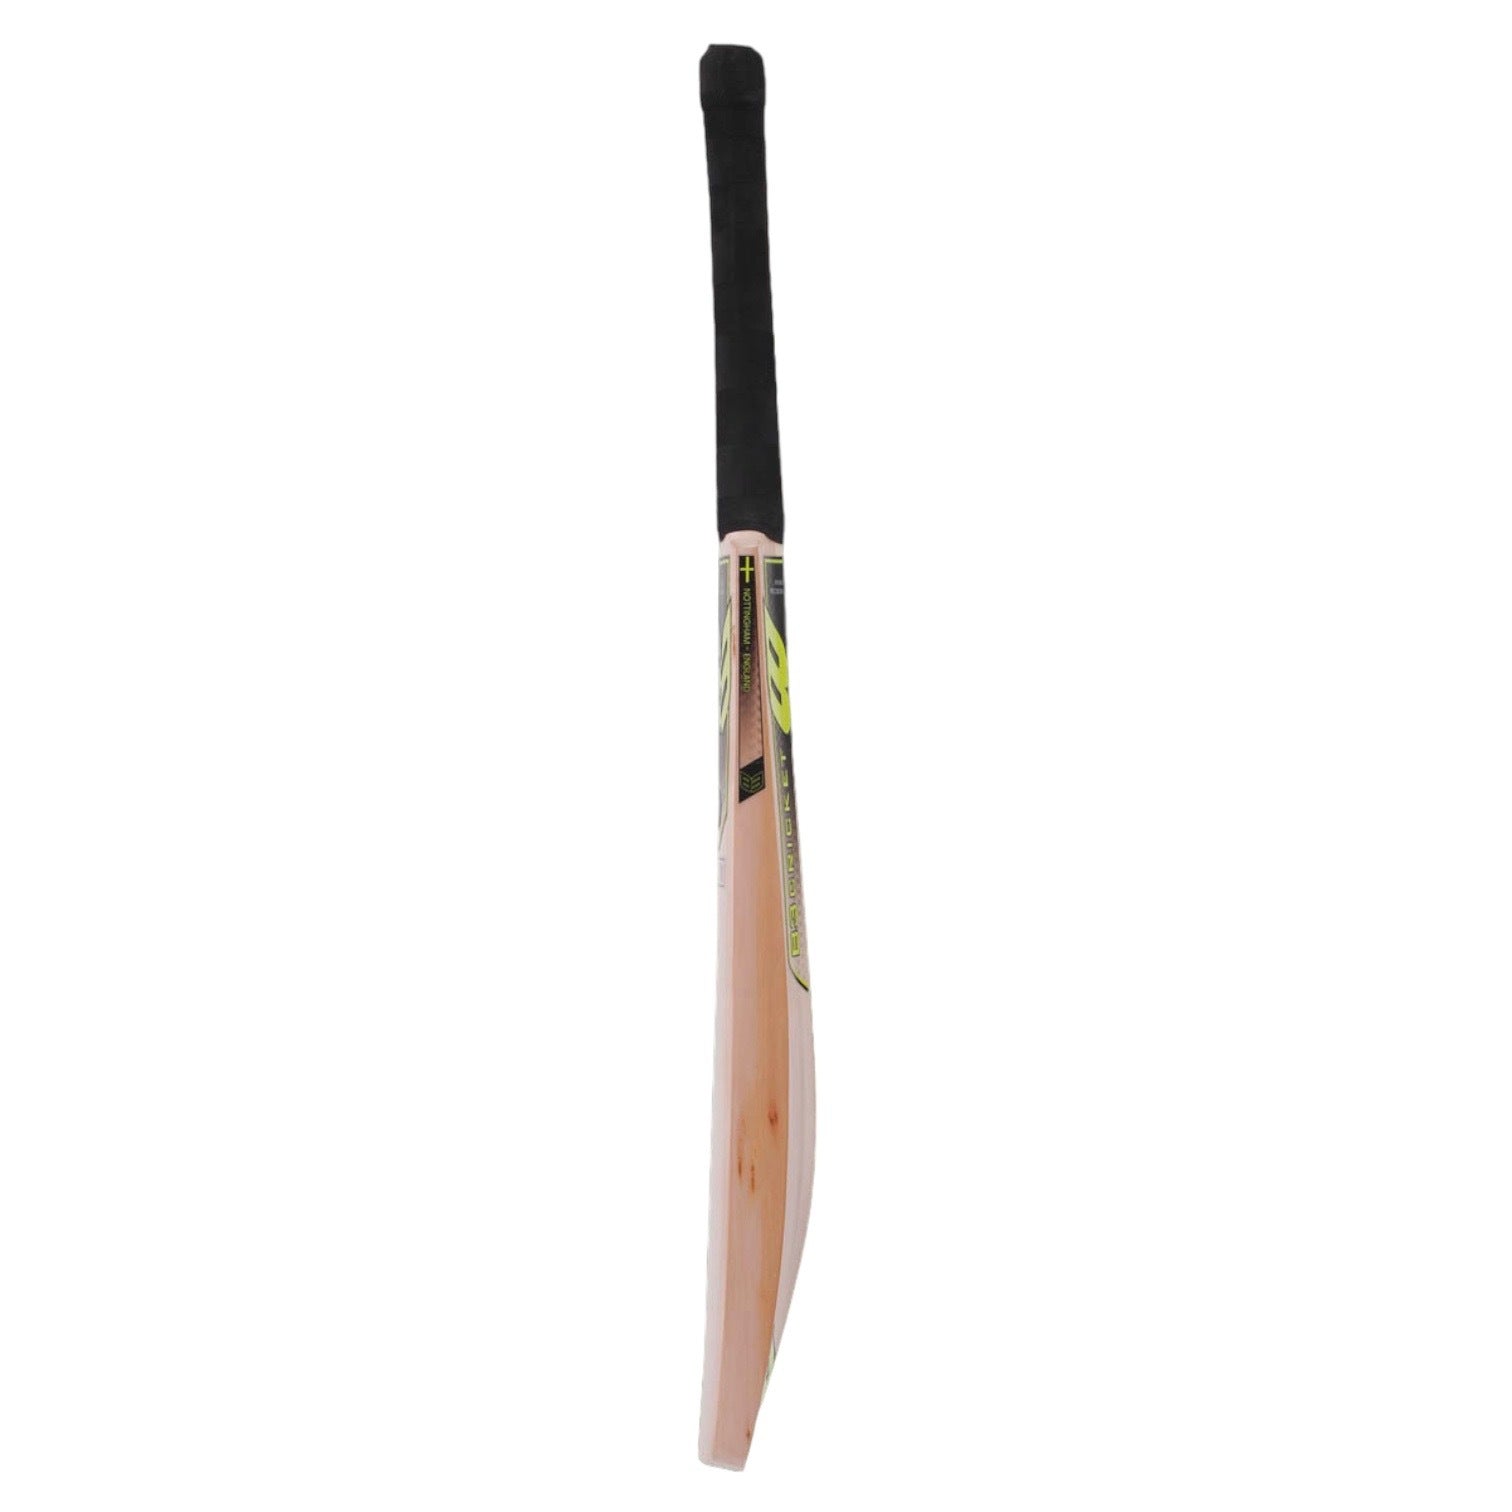 B3 Cricket Sublime Excel (Grade 3) Cricket Bat - The Cricket Store